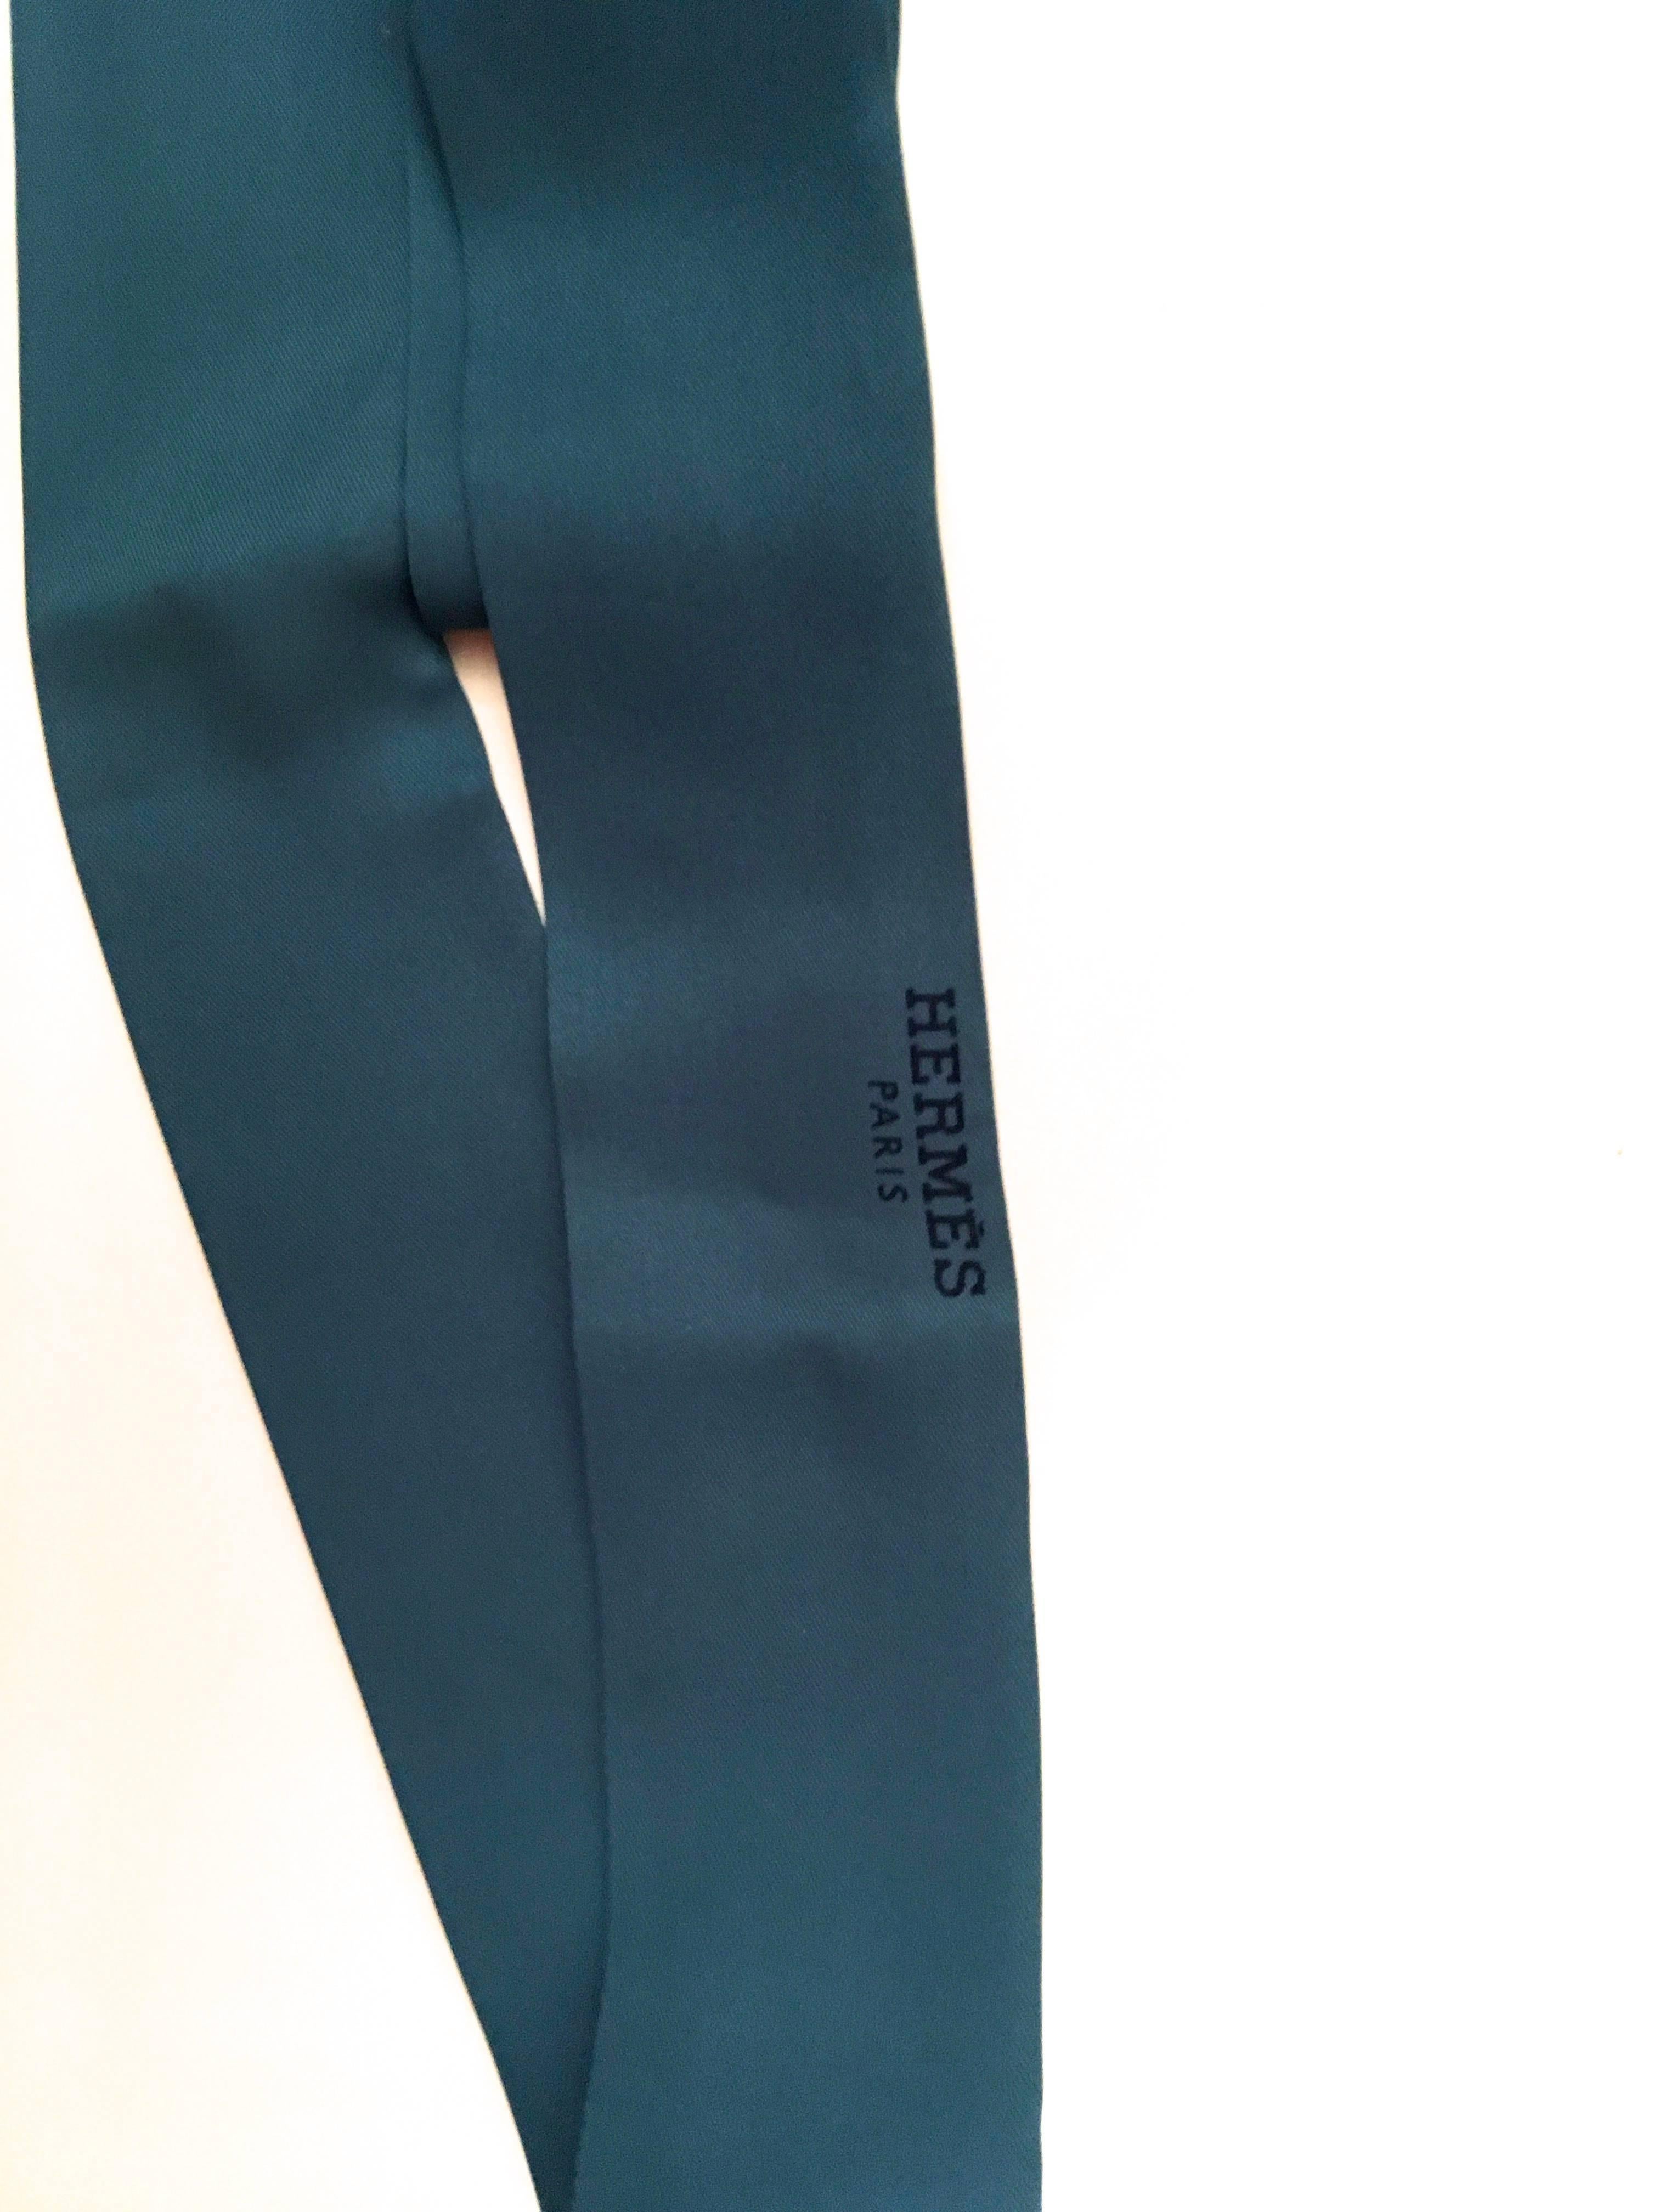 Blue Rare Hermes Scarf / Tie / Belt - 100% Silk - New  For Sale